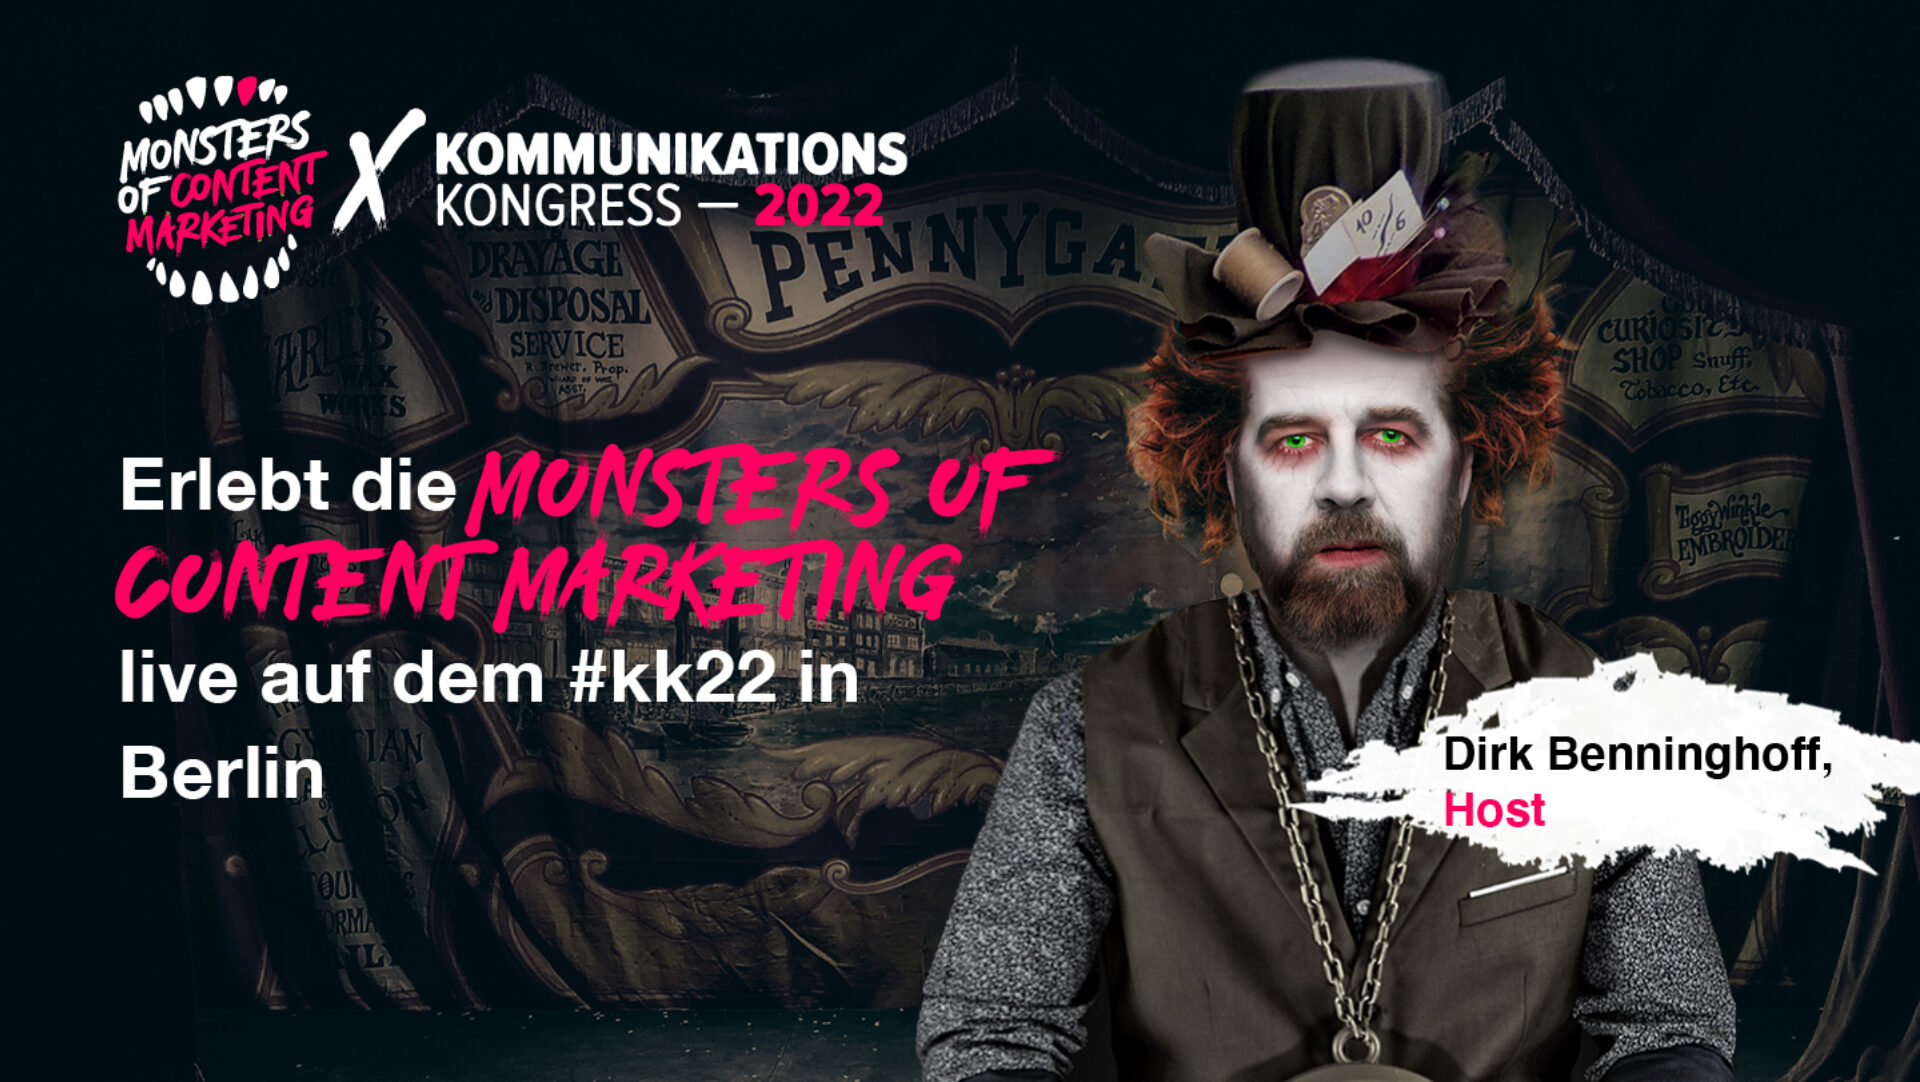 Monsters of Content Marketing Kommunikationskongress 2022